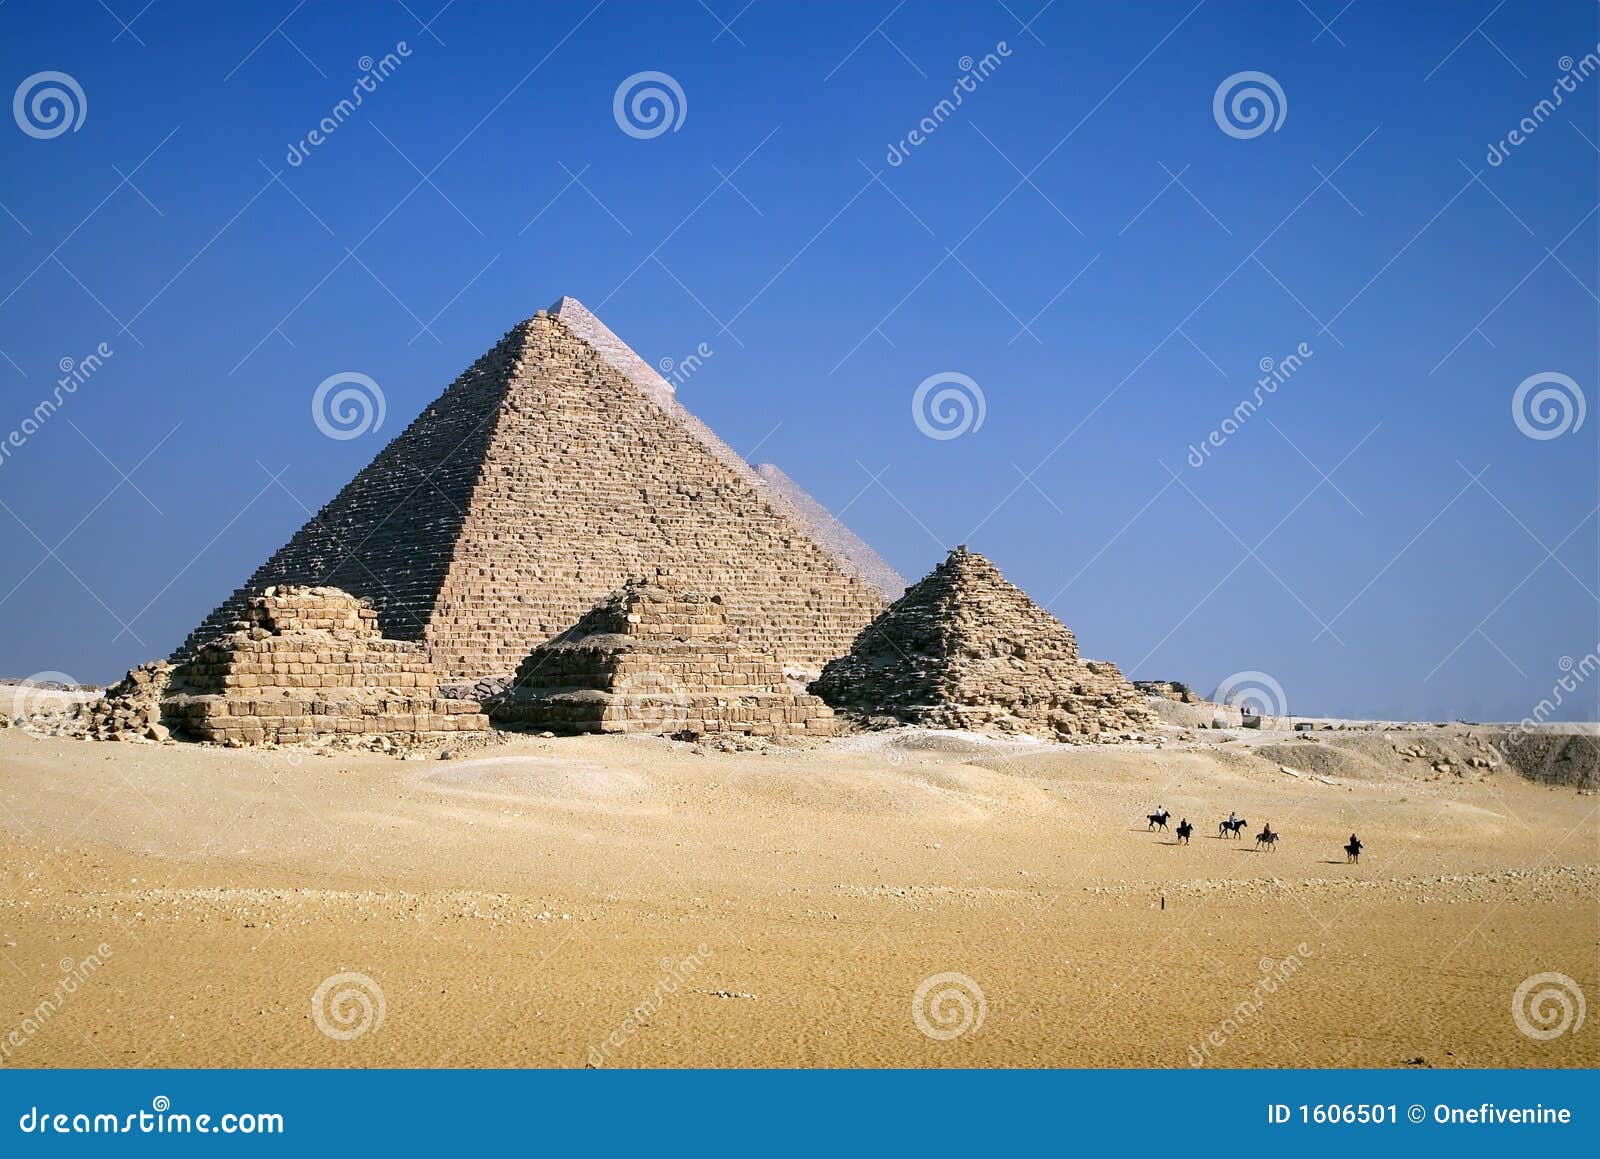 pyramids on horseback